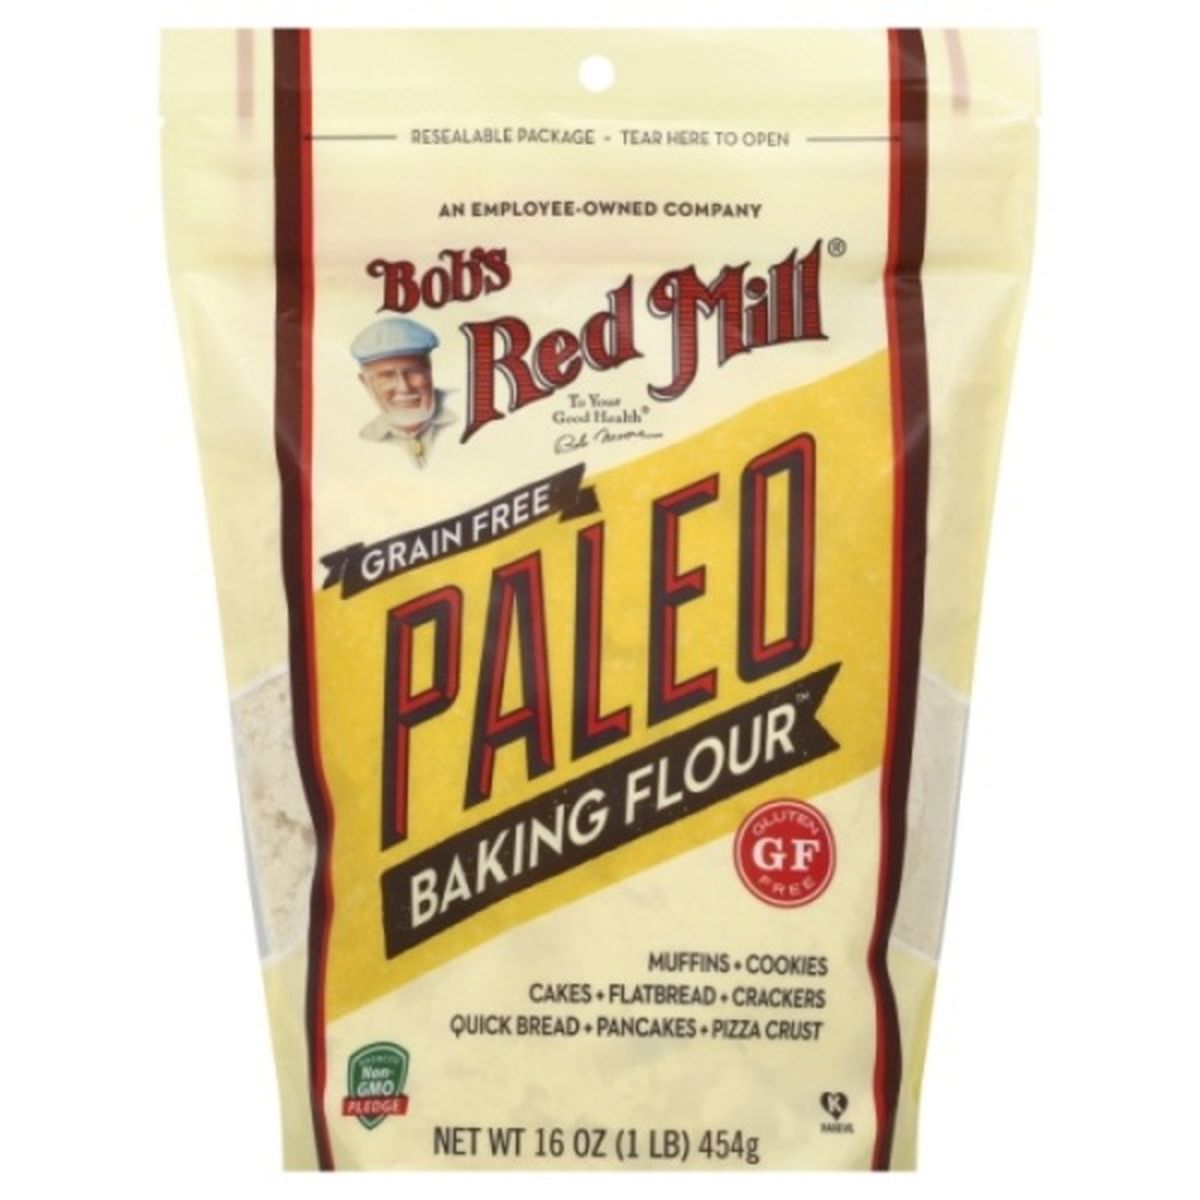 Calories in Bob's Red Mill Baking Flour, Grain Free, Paleo